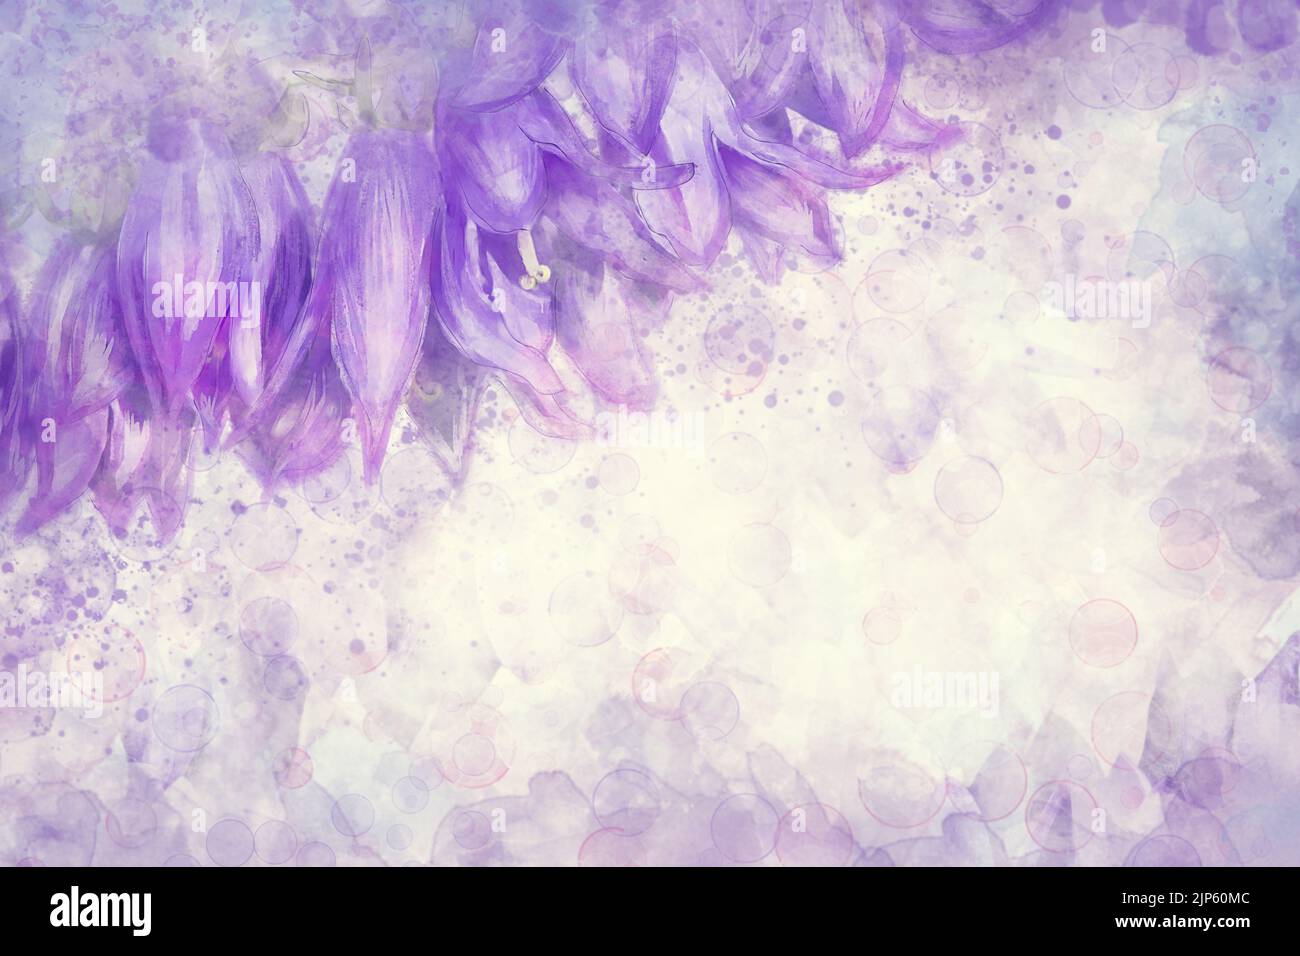 Abstrakt Lila Blume Hintergrund Aquarell.Digitale Illustration. Stockfoto